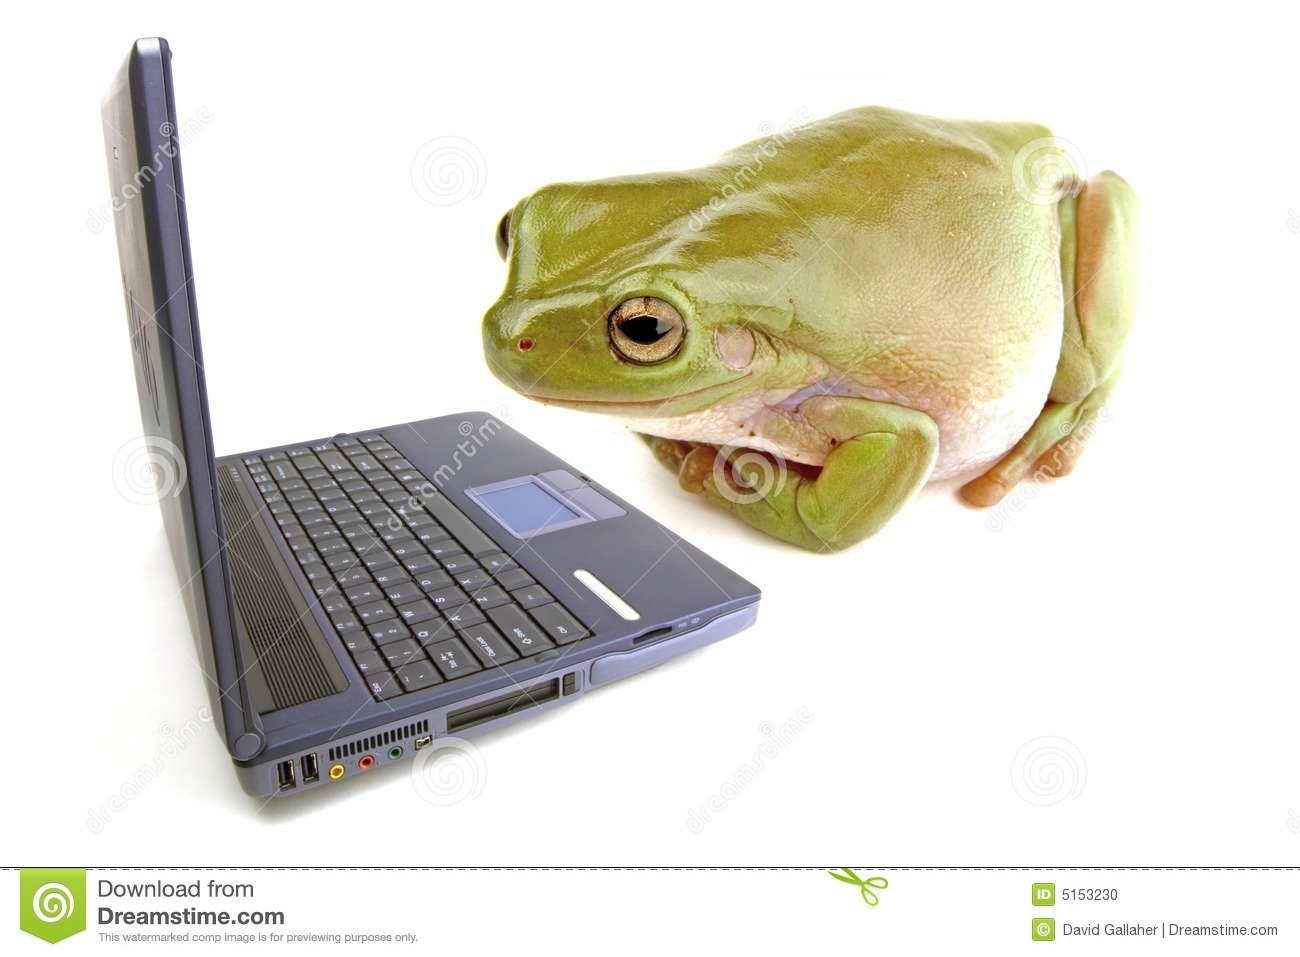 DudeTheNinja on X: frog that says reddit instead of ribbit